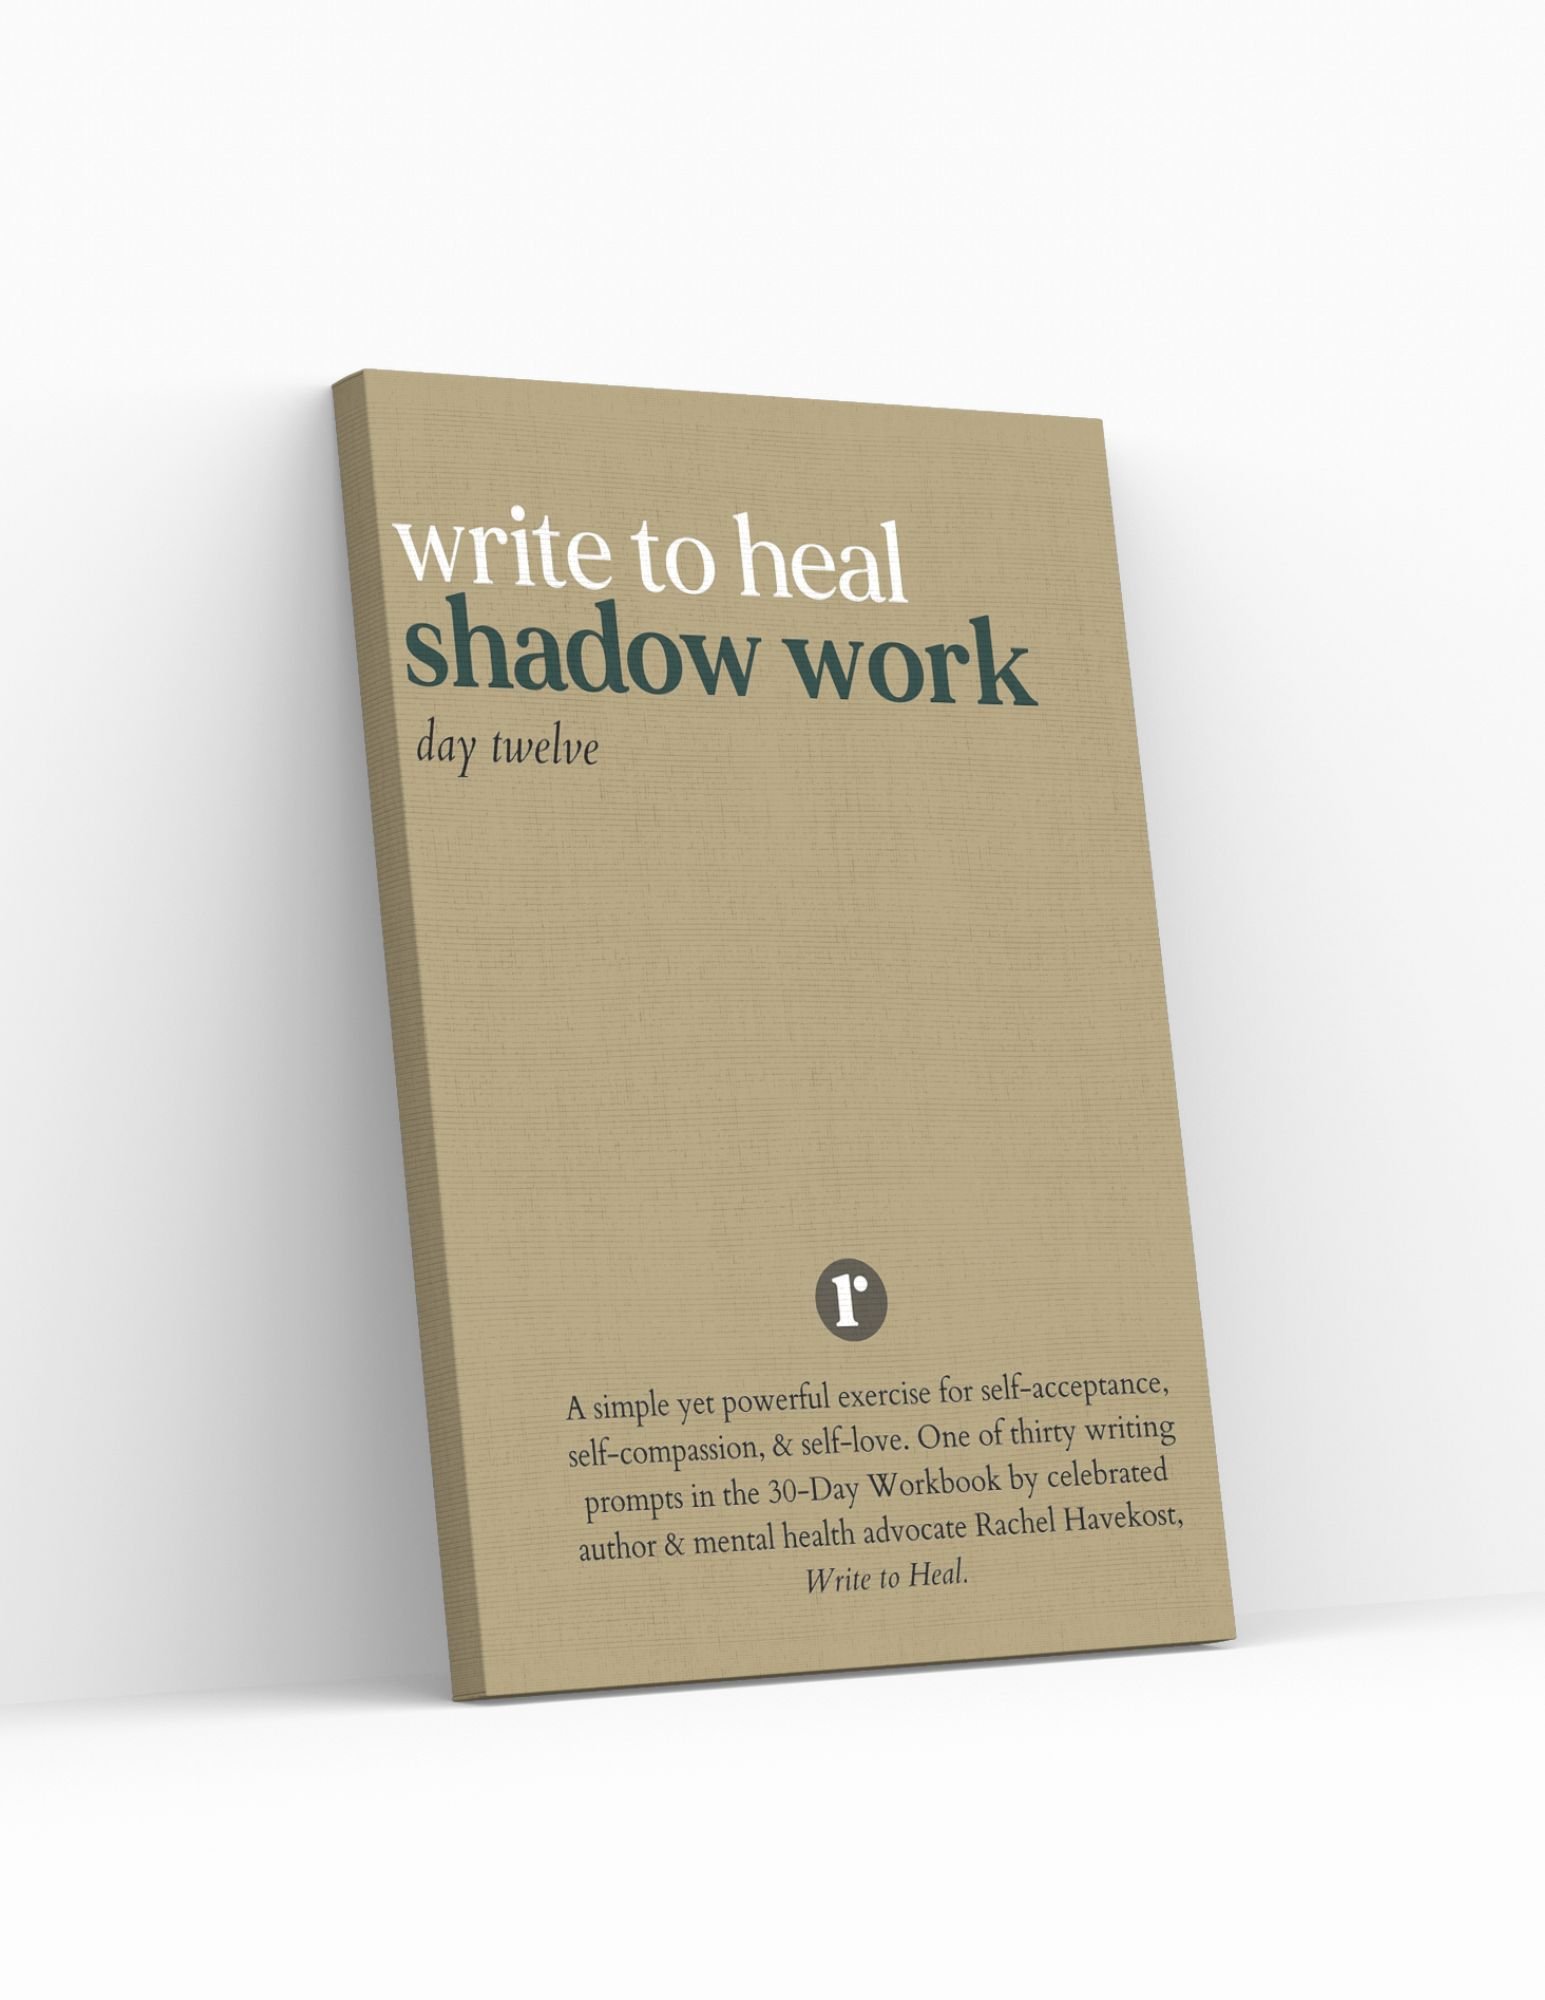 Printable Shadow Work Journal for Relationship Trauma [PDF]